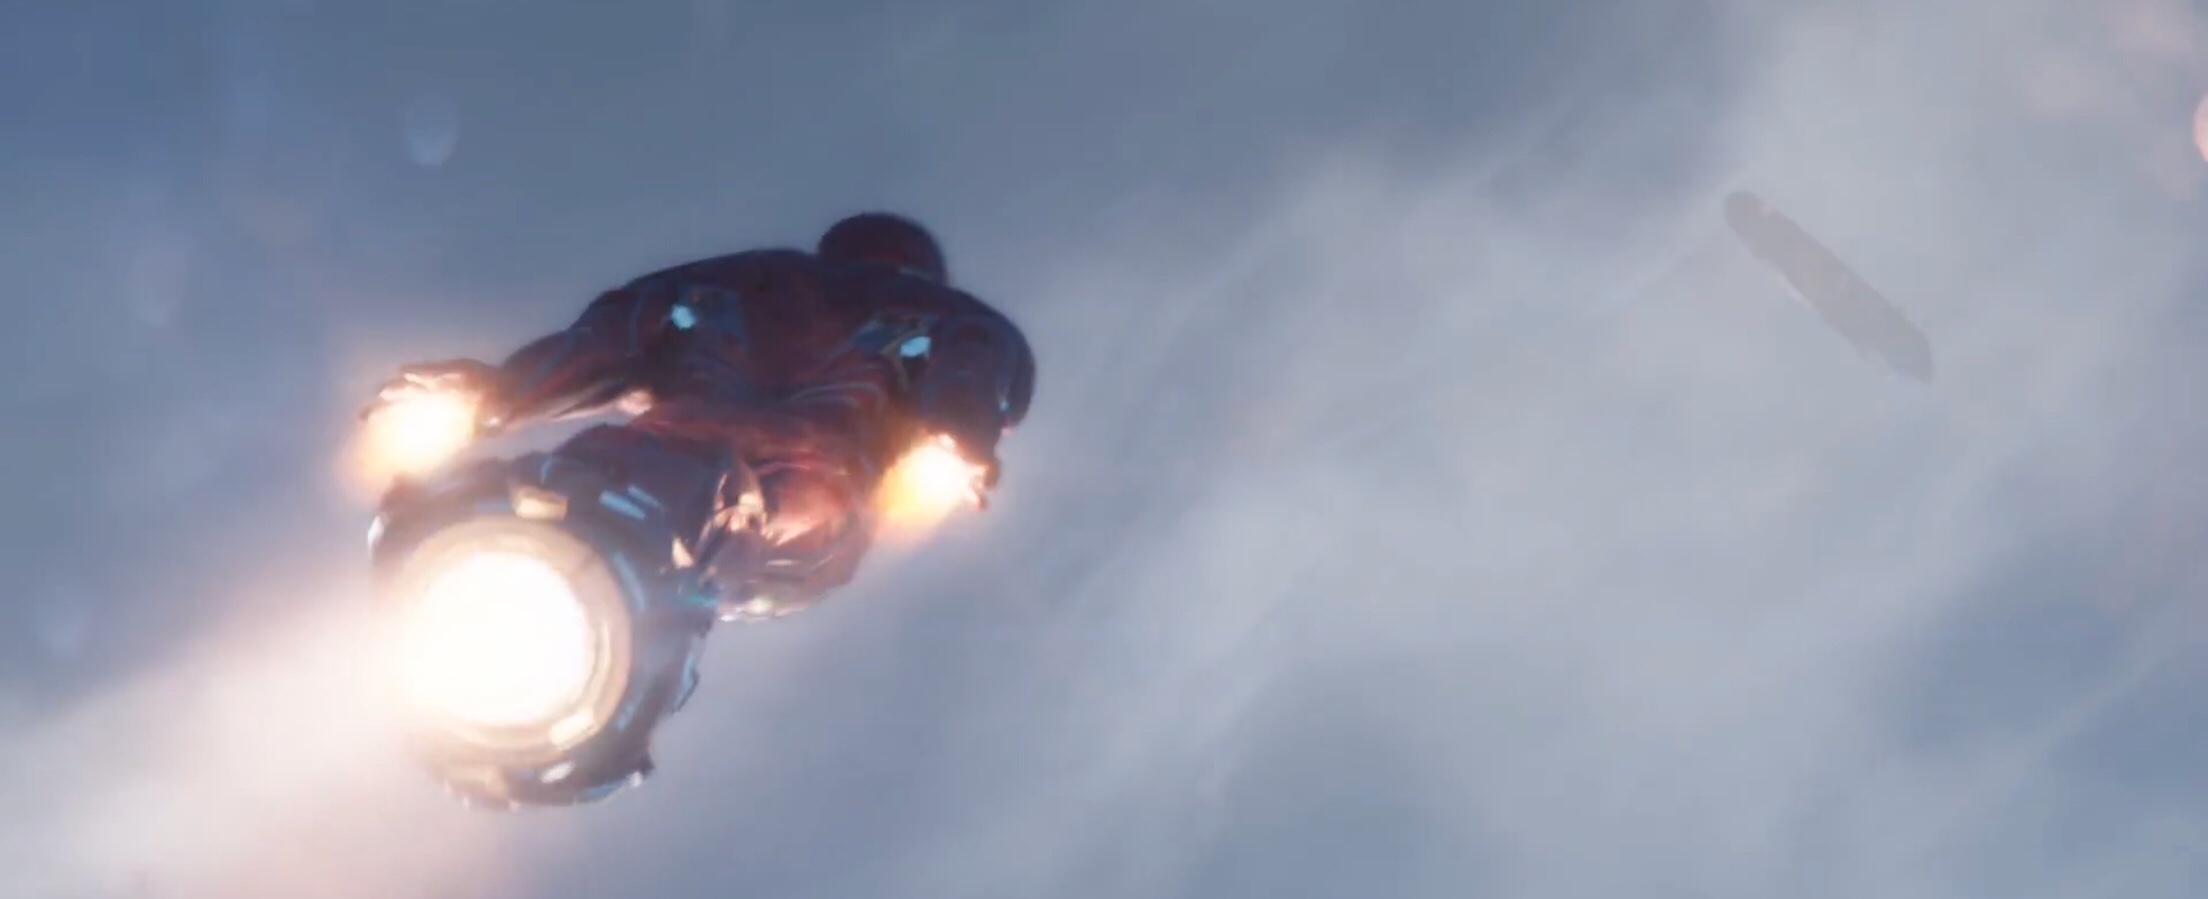 iron man dies in avengers infinity war